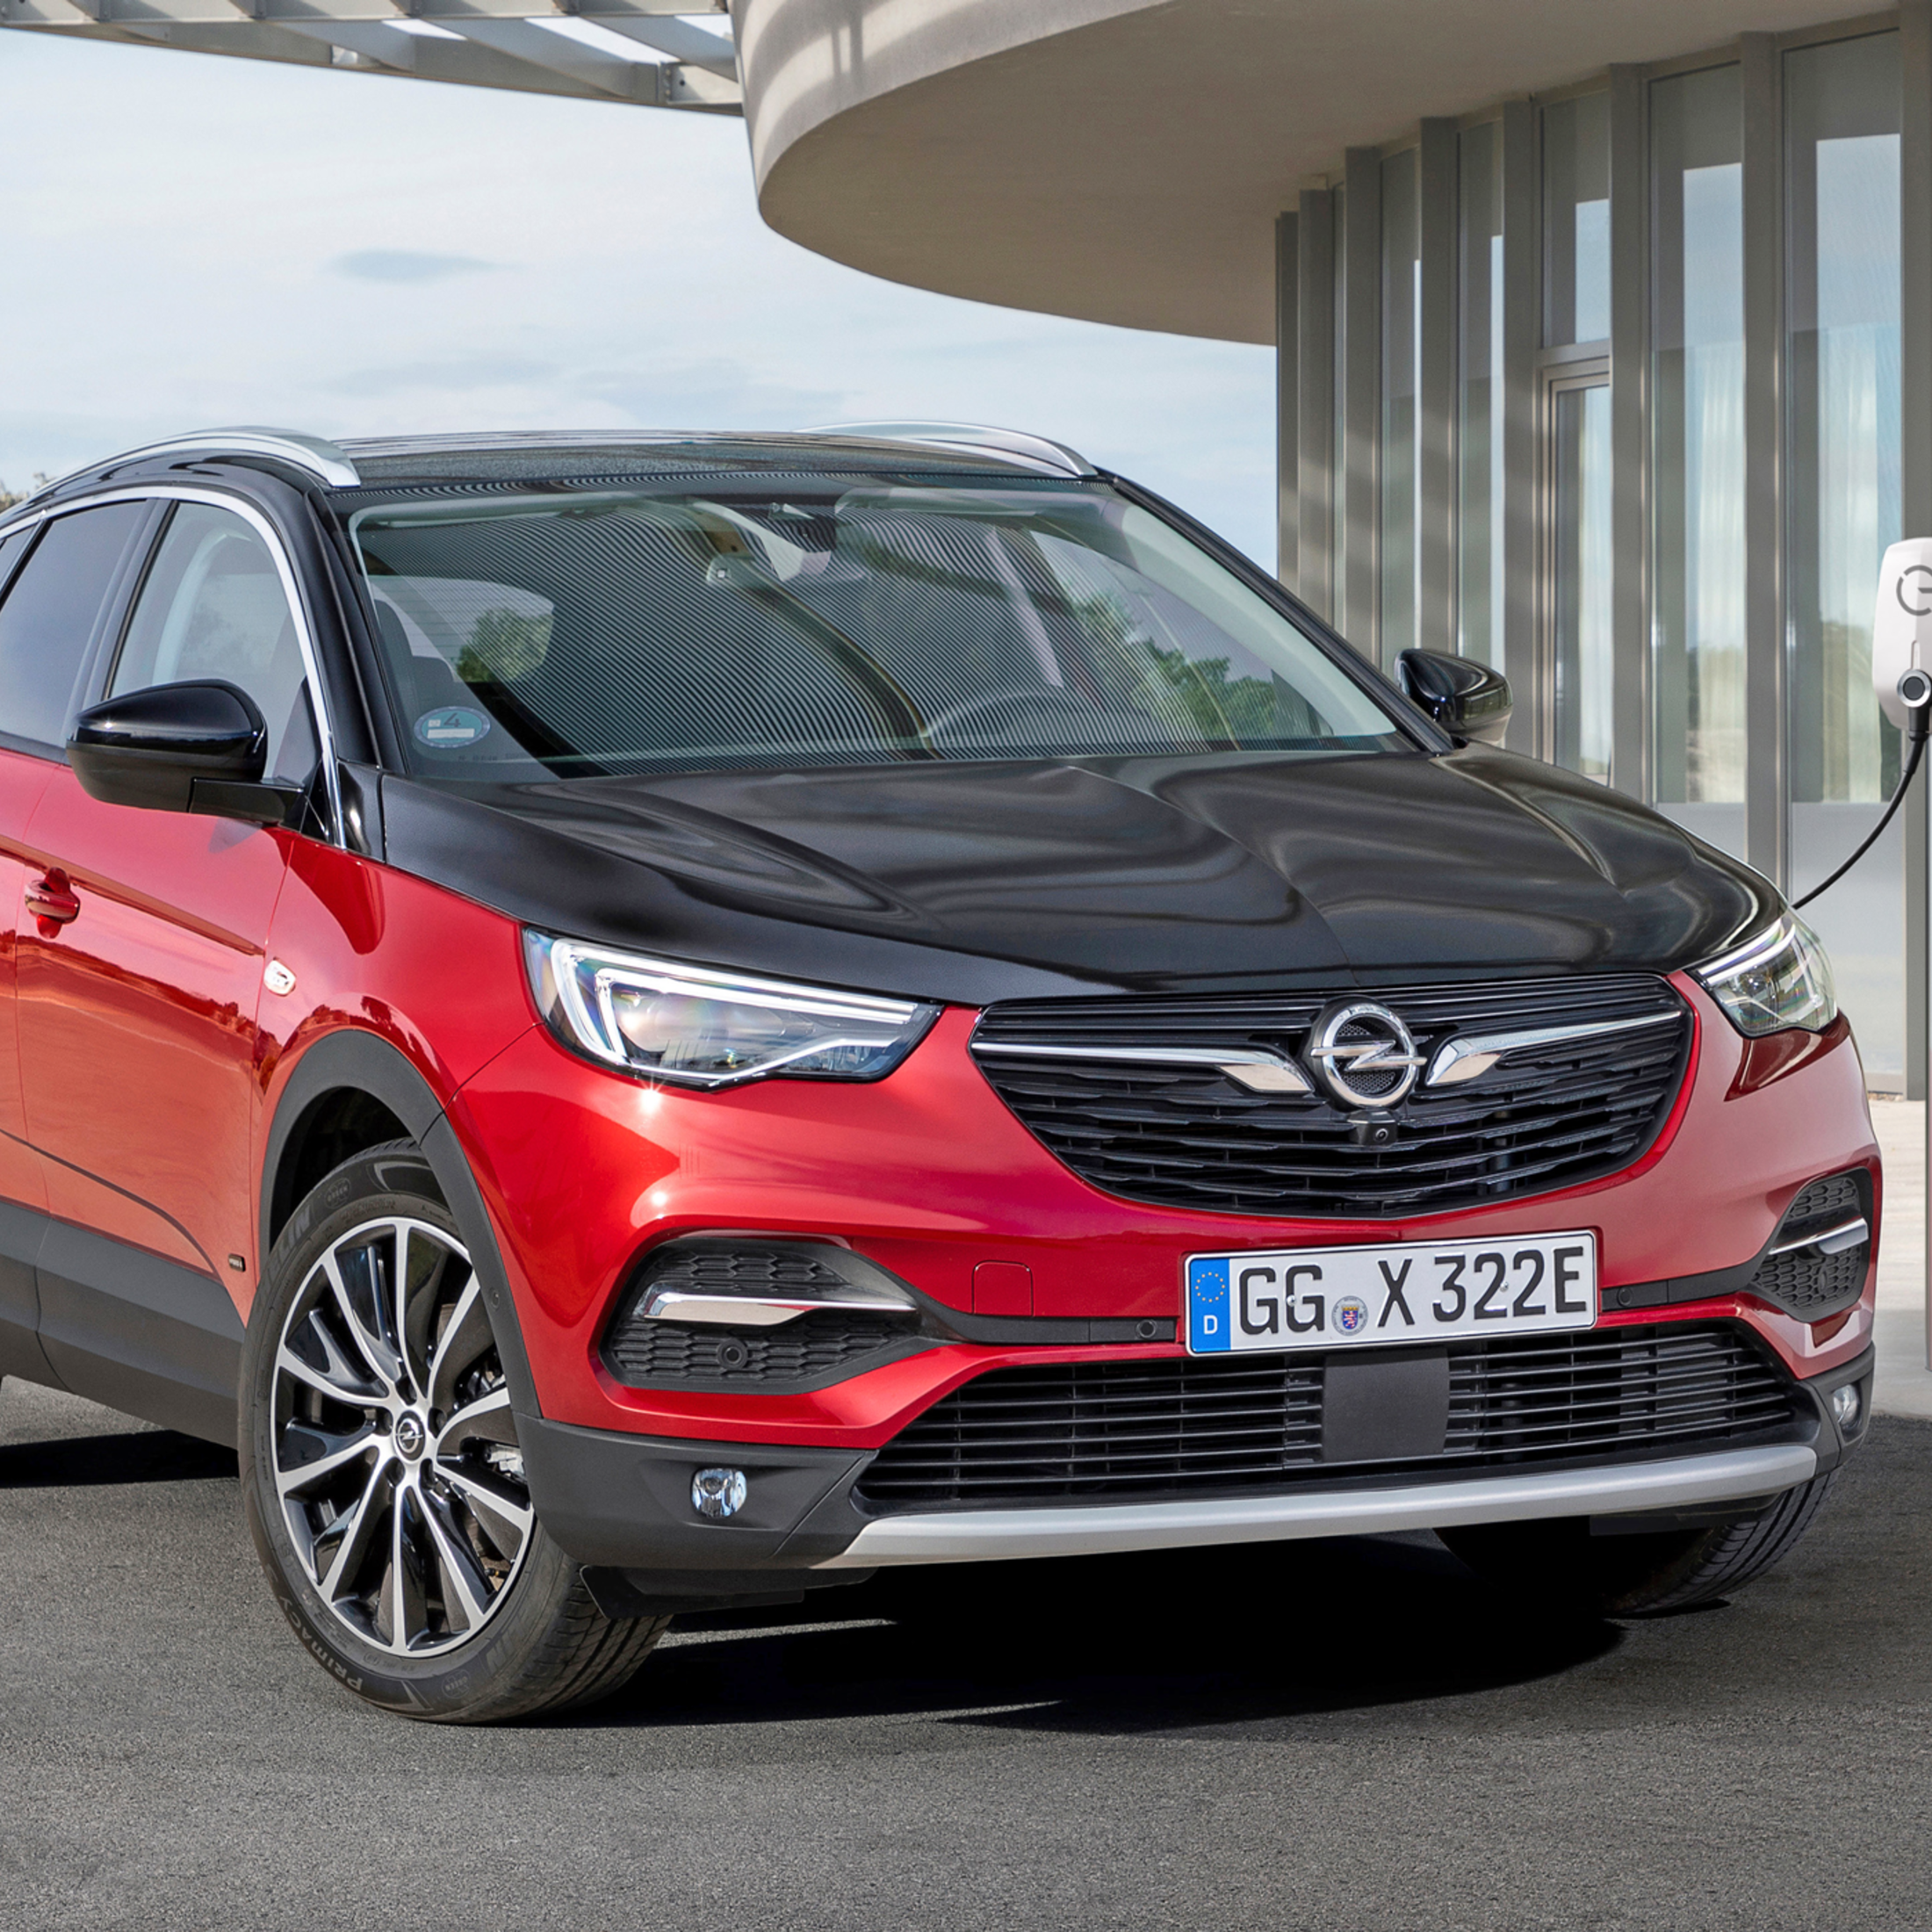 Opel Grandland X Hybrid4 (2019): Preise, Plug-in-Hybrid, Daten